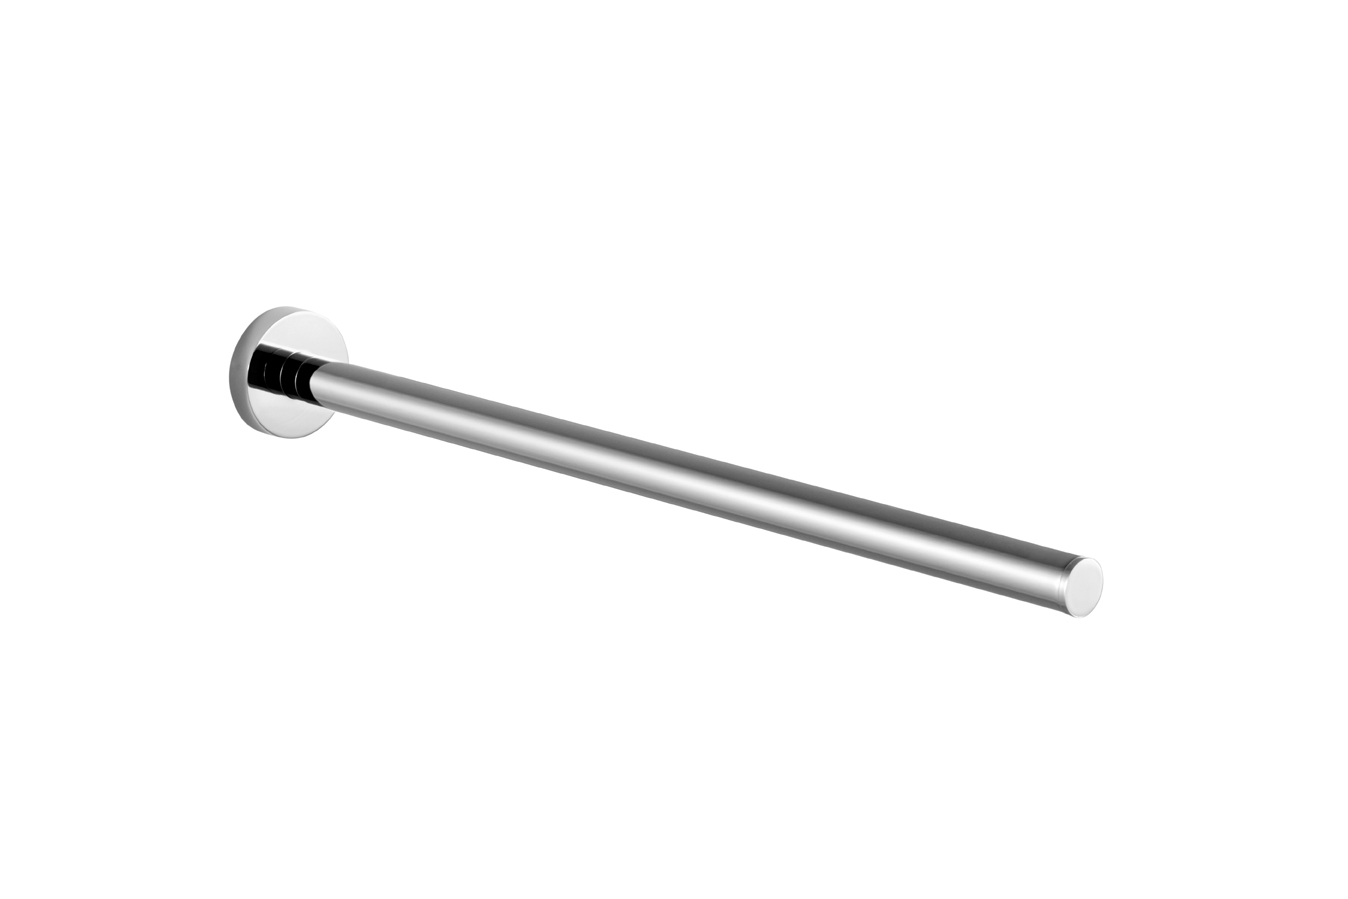 AVENARIUS Handtuchhalter extra stabil
einarmig 425 mm, Serie Univ. 9001410010